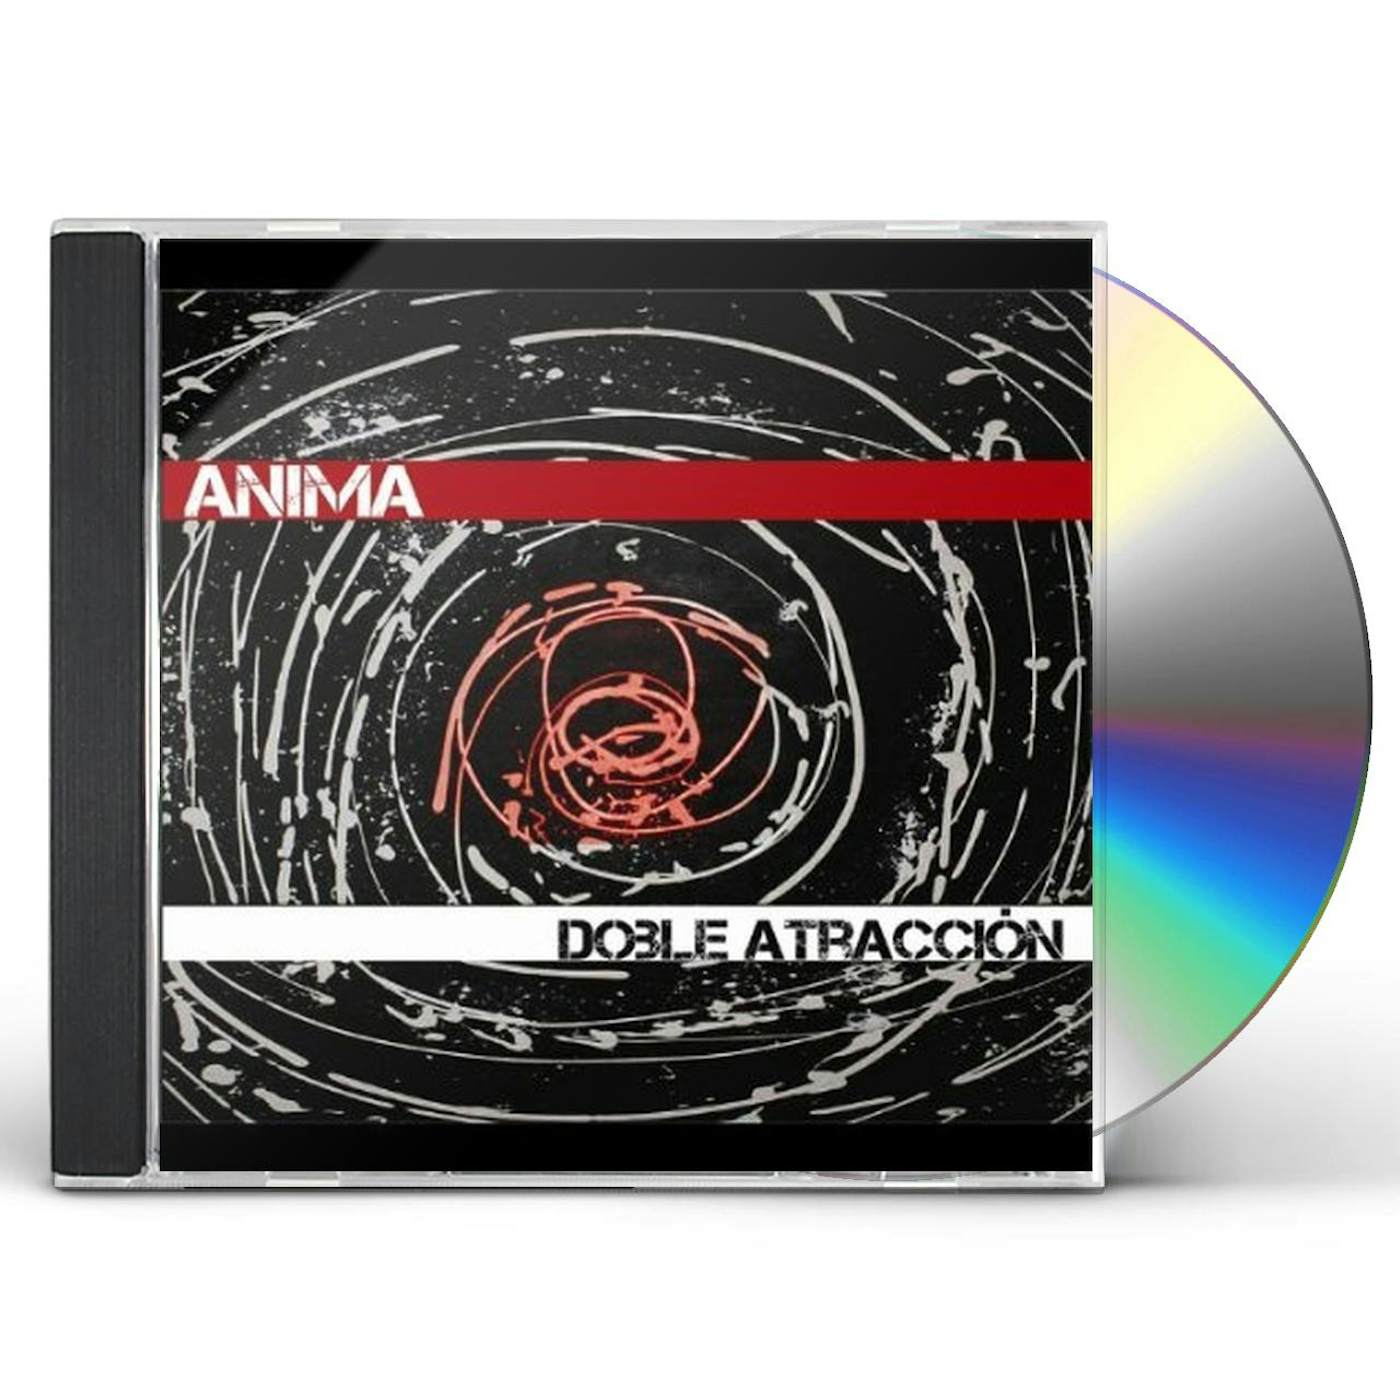 Anima DOBLE ATRACCISN CD